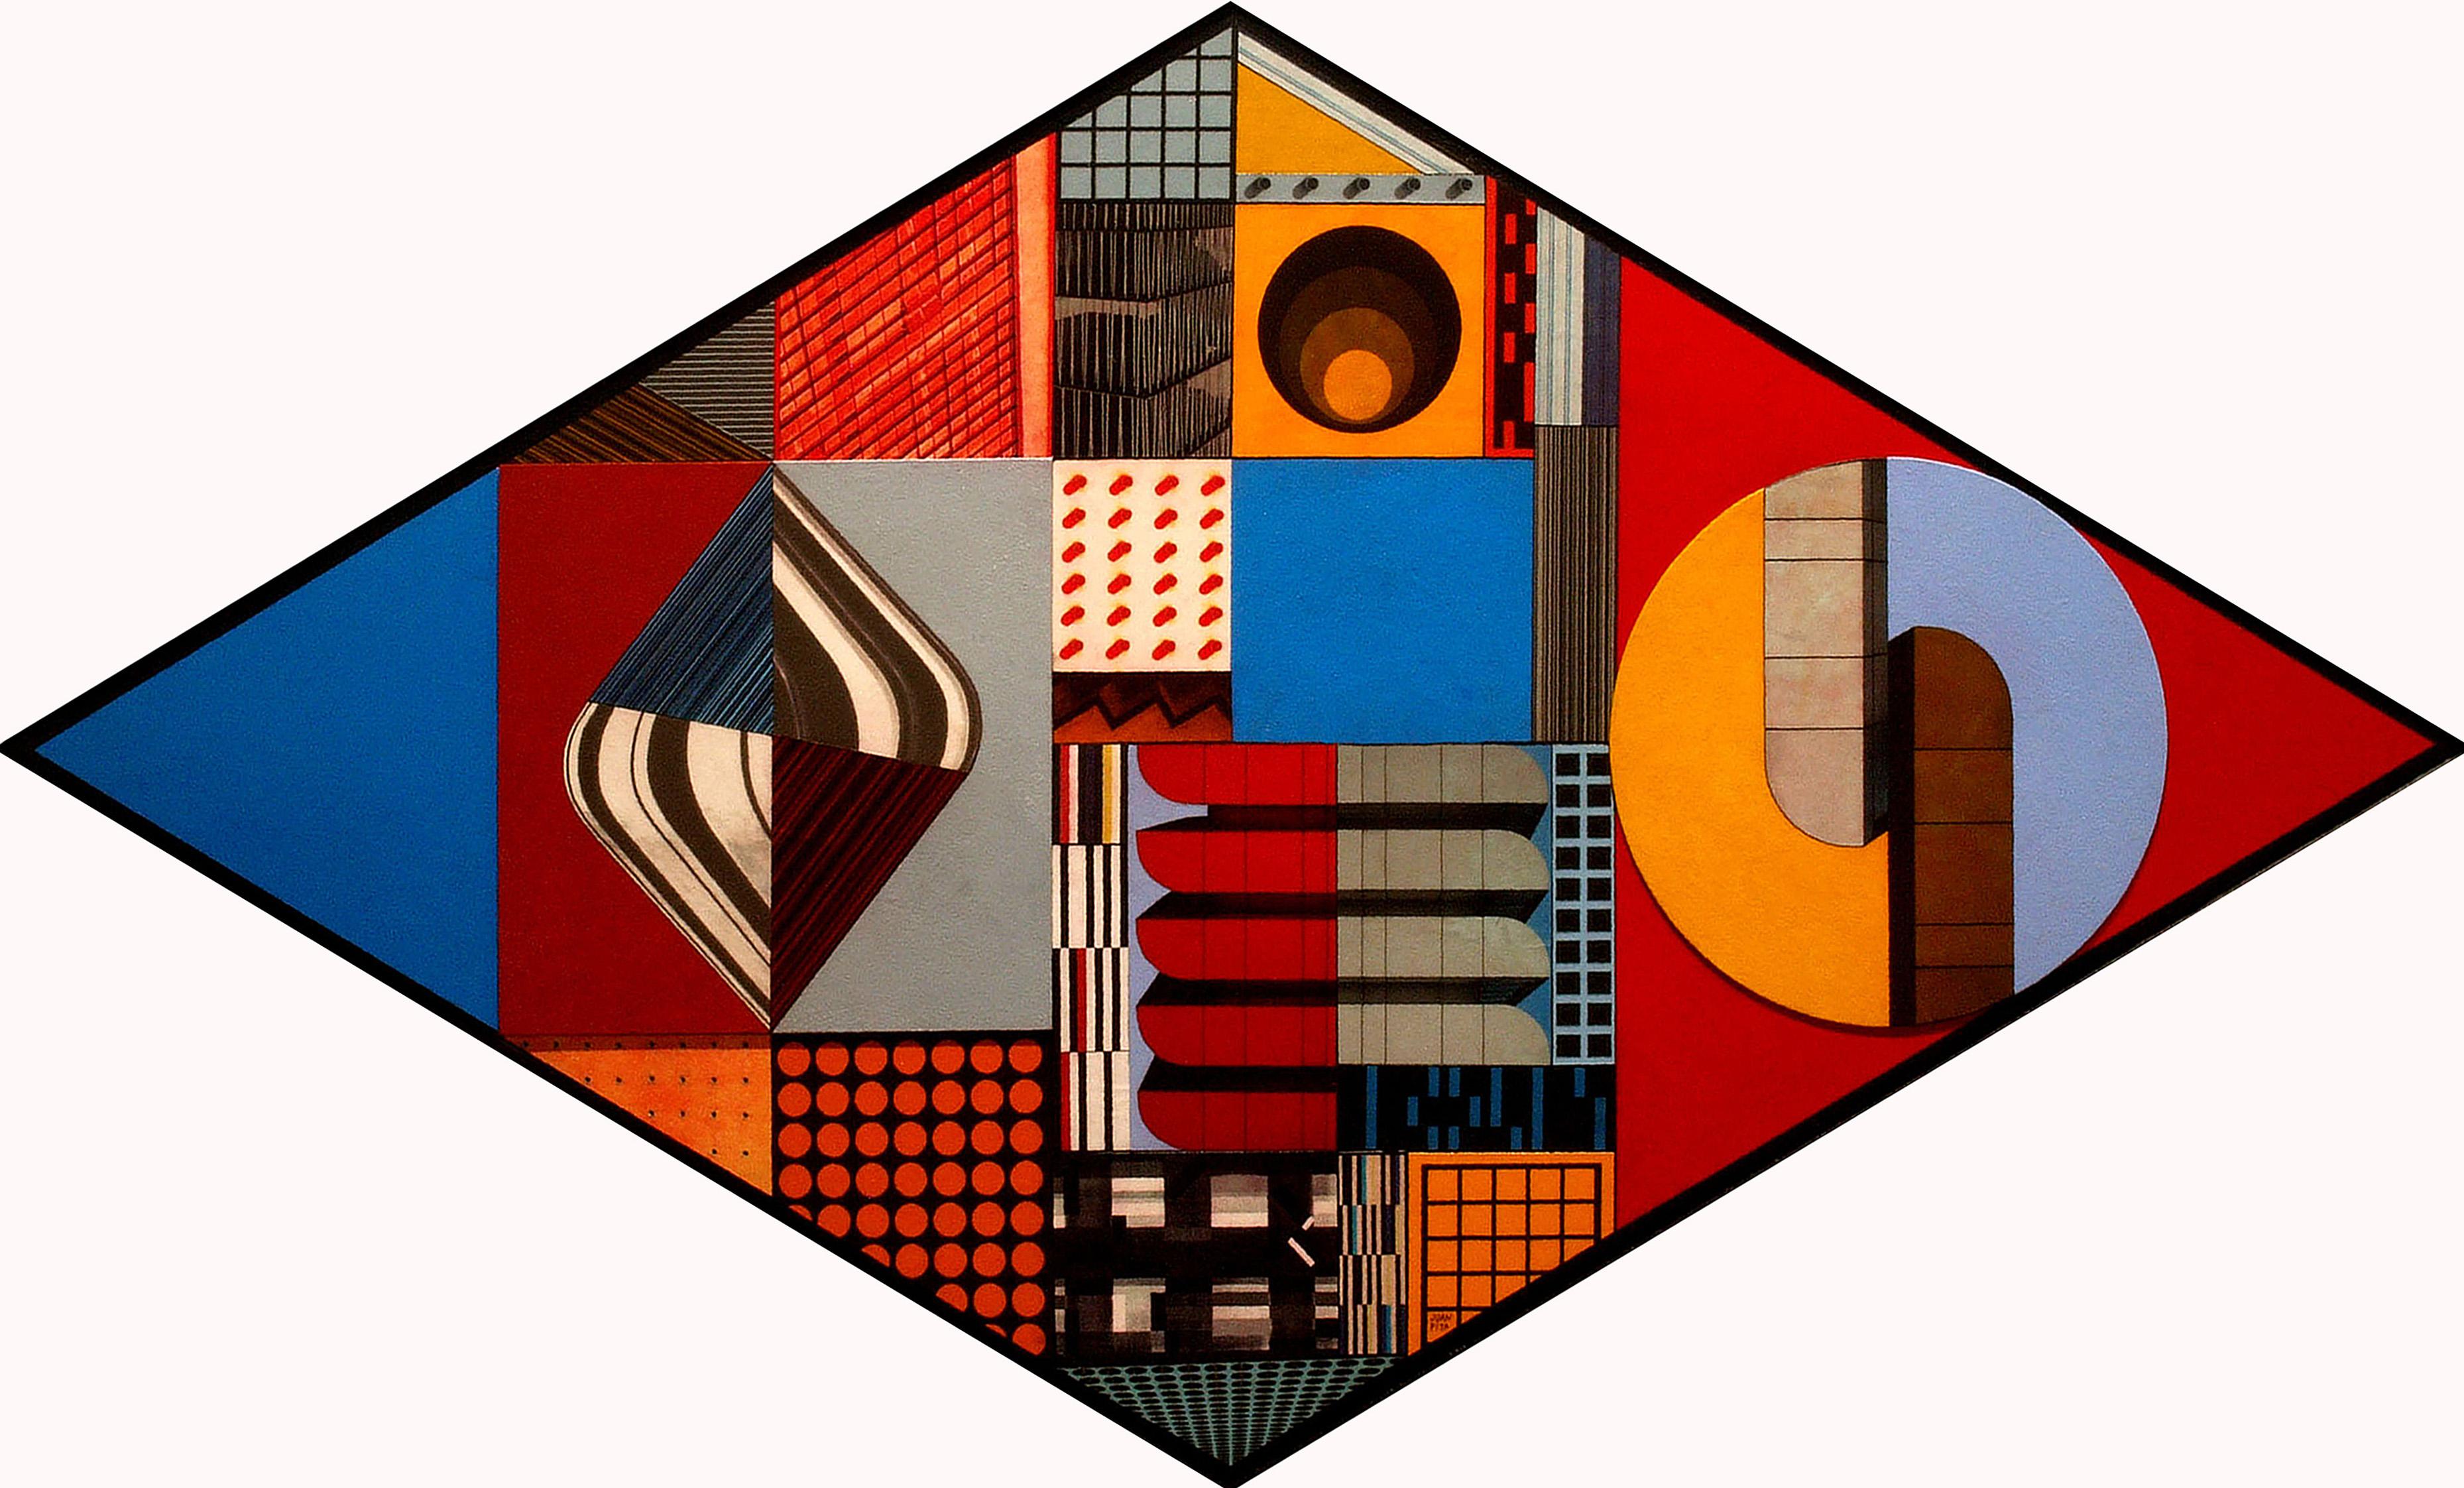 Bauhaus Archiv en rombo. Futurist colorful abstract constructivist painting